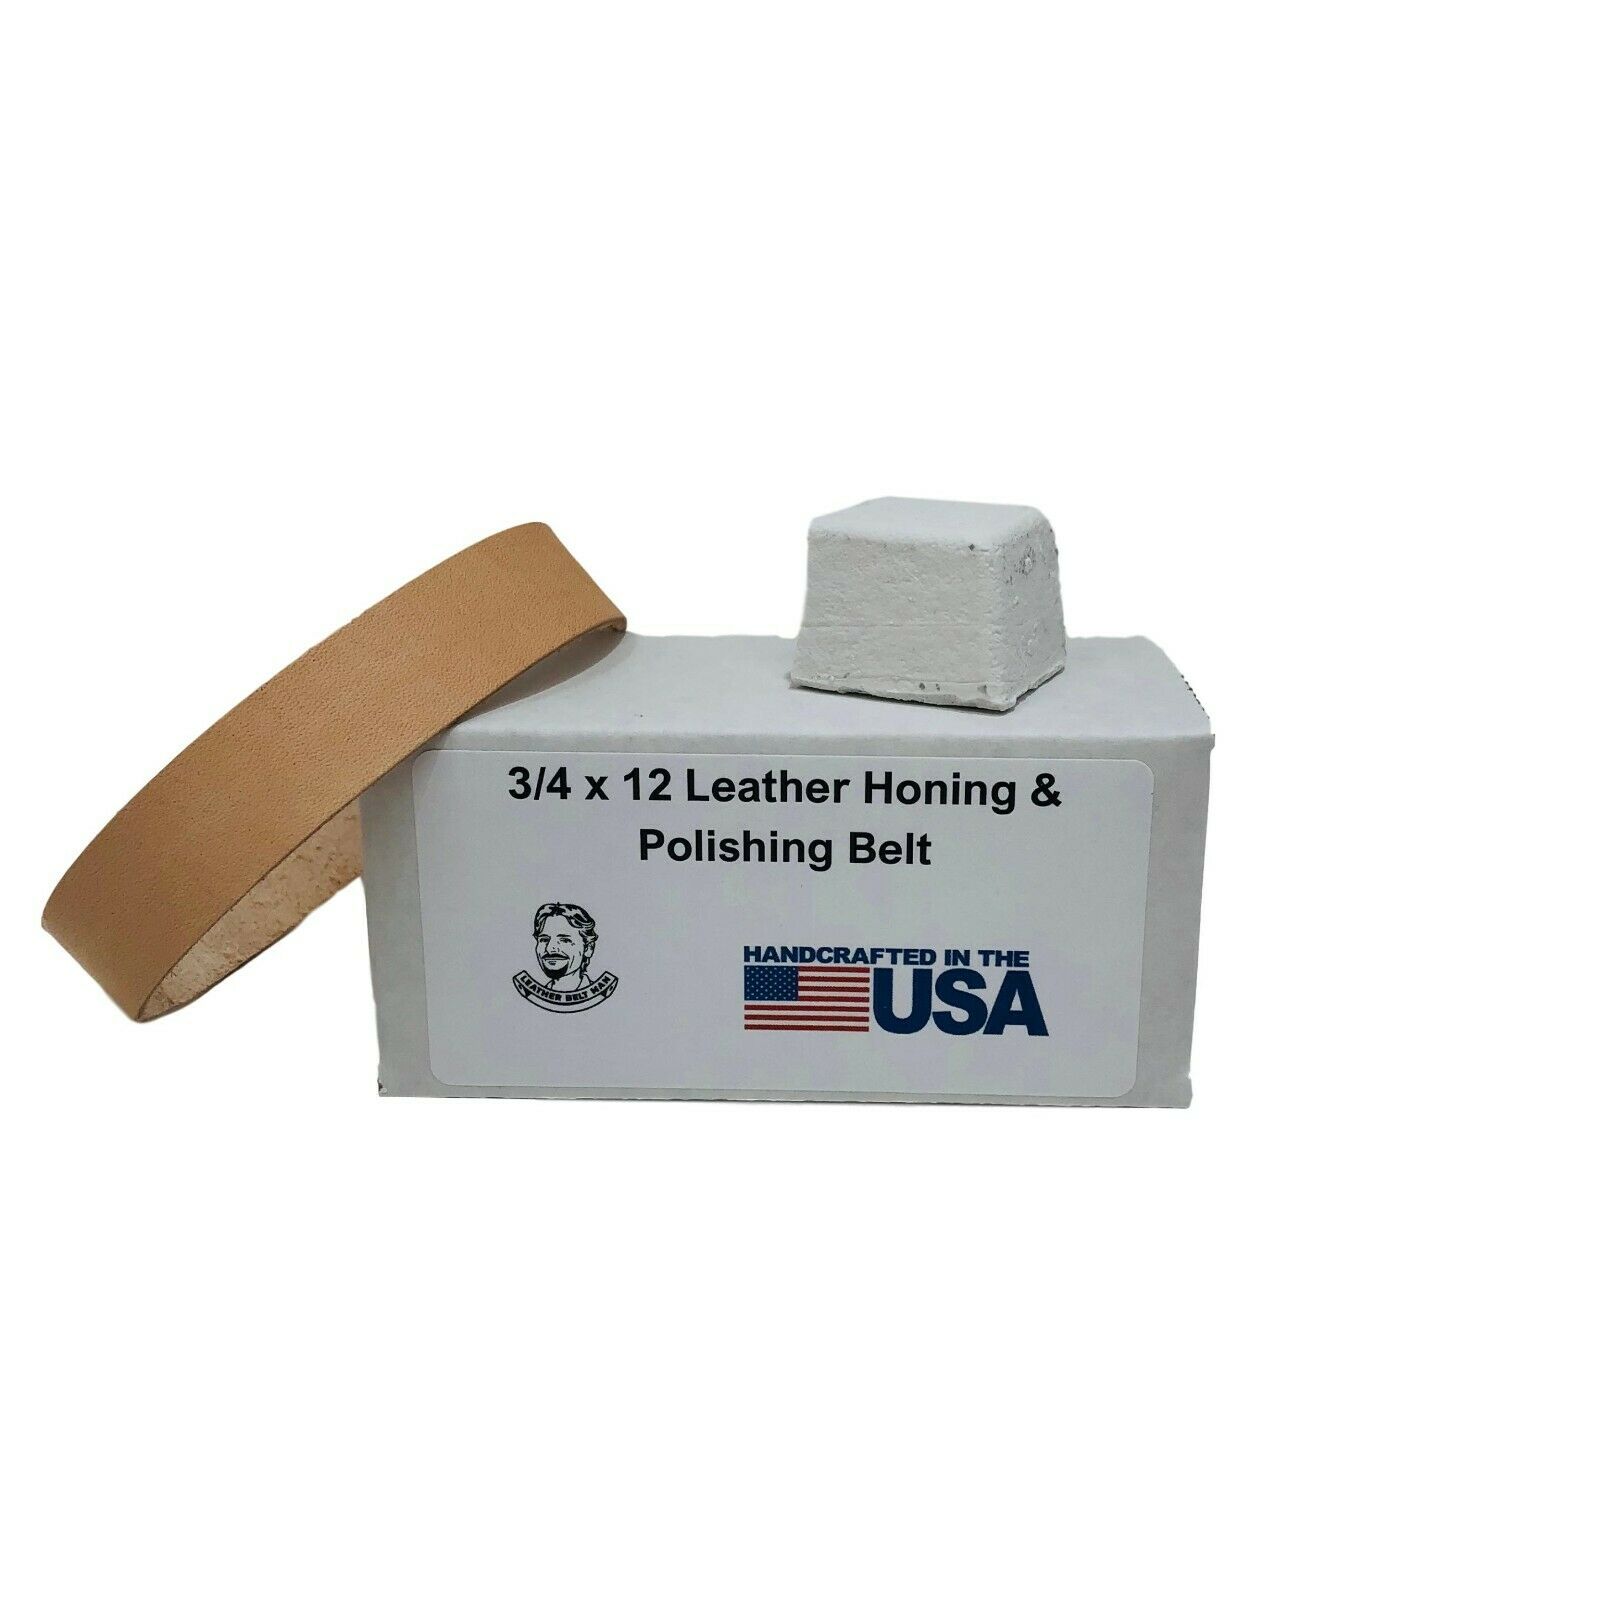 3/4” X 12” Leather Honing & Polishing Belt. Fits Ken Onion Work Sharp